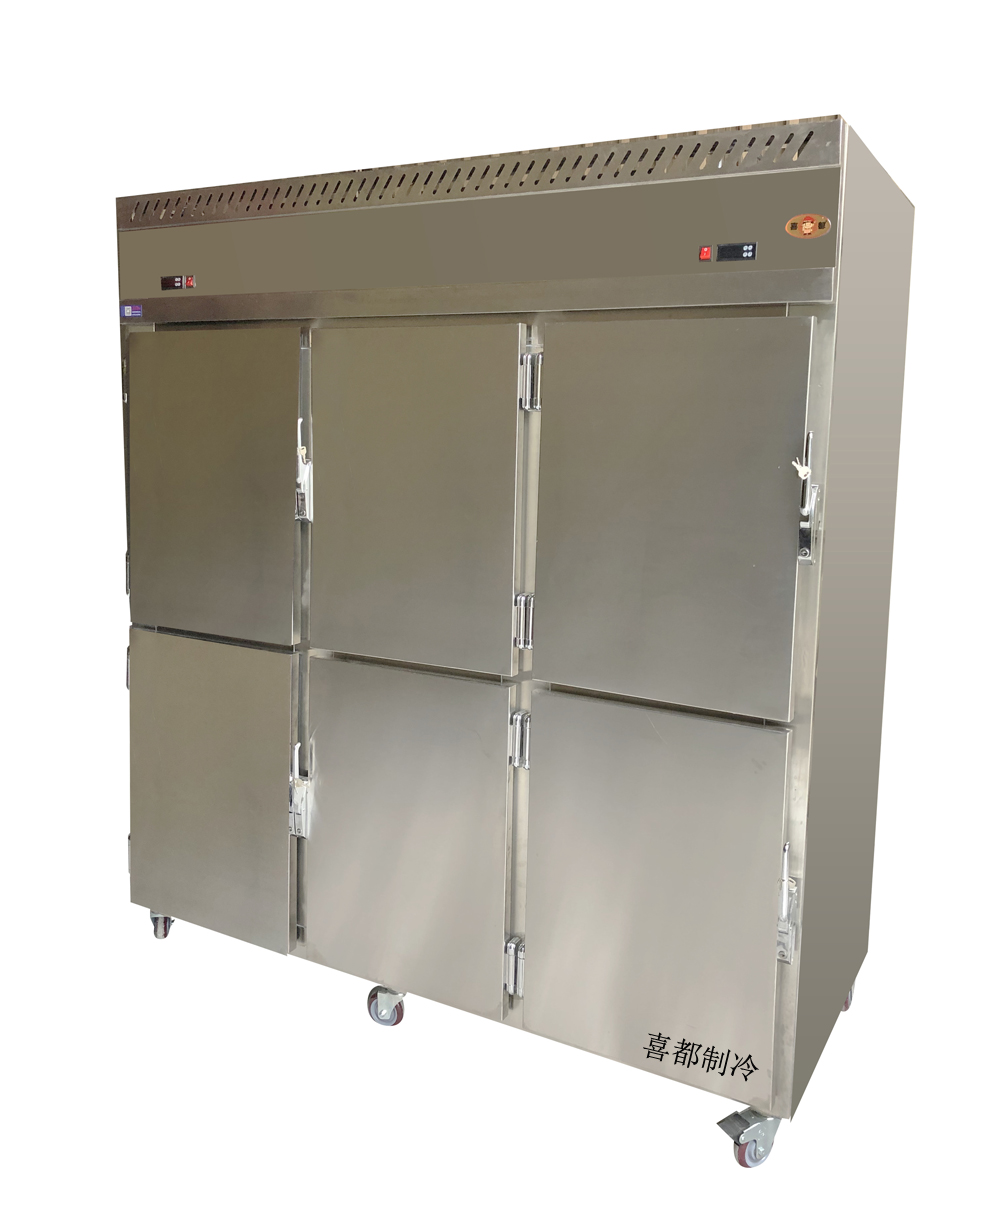 Six door stainless steel refrigerated freezerXID-6D00R